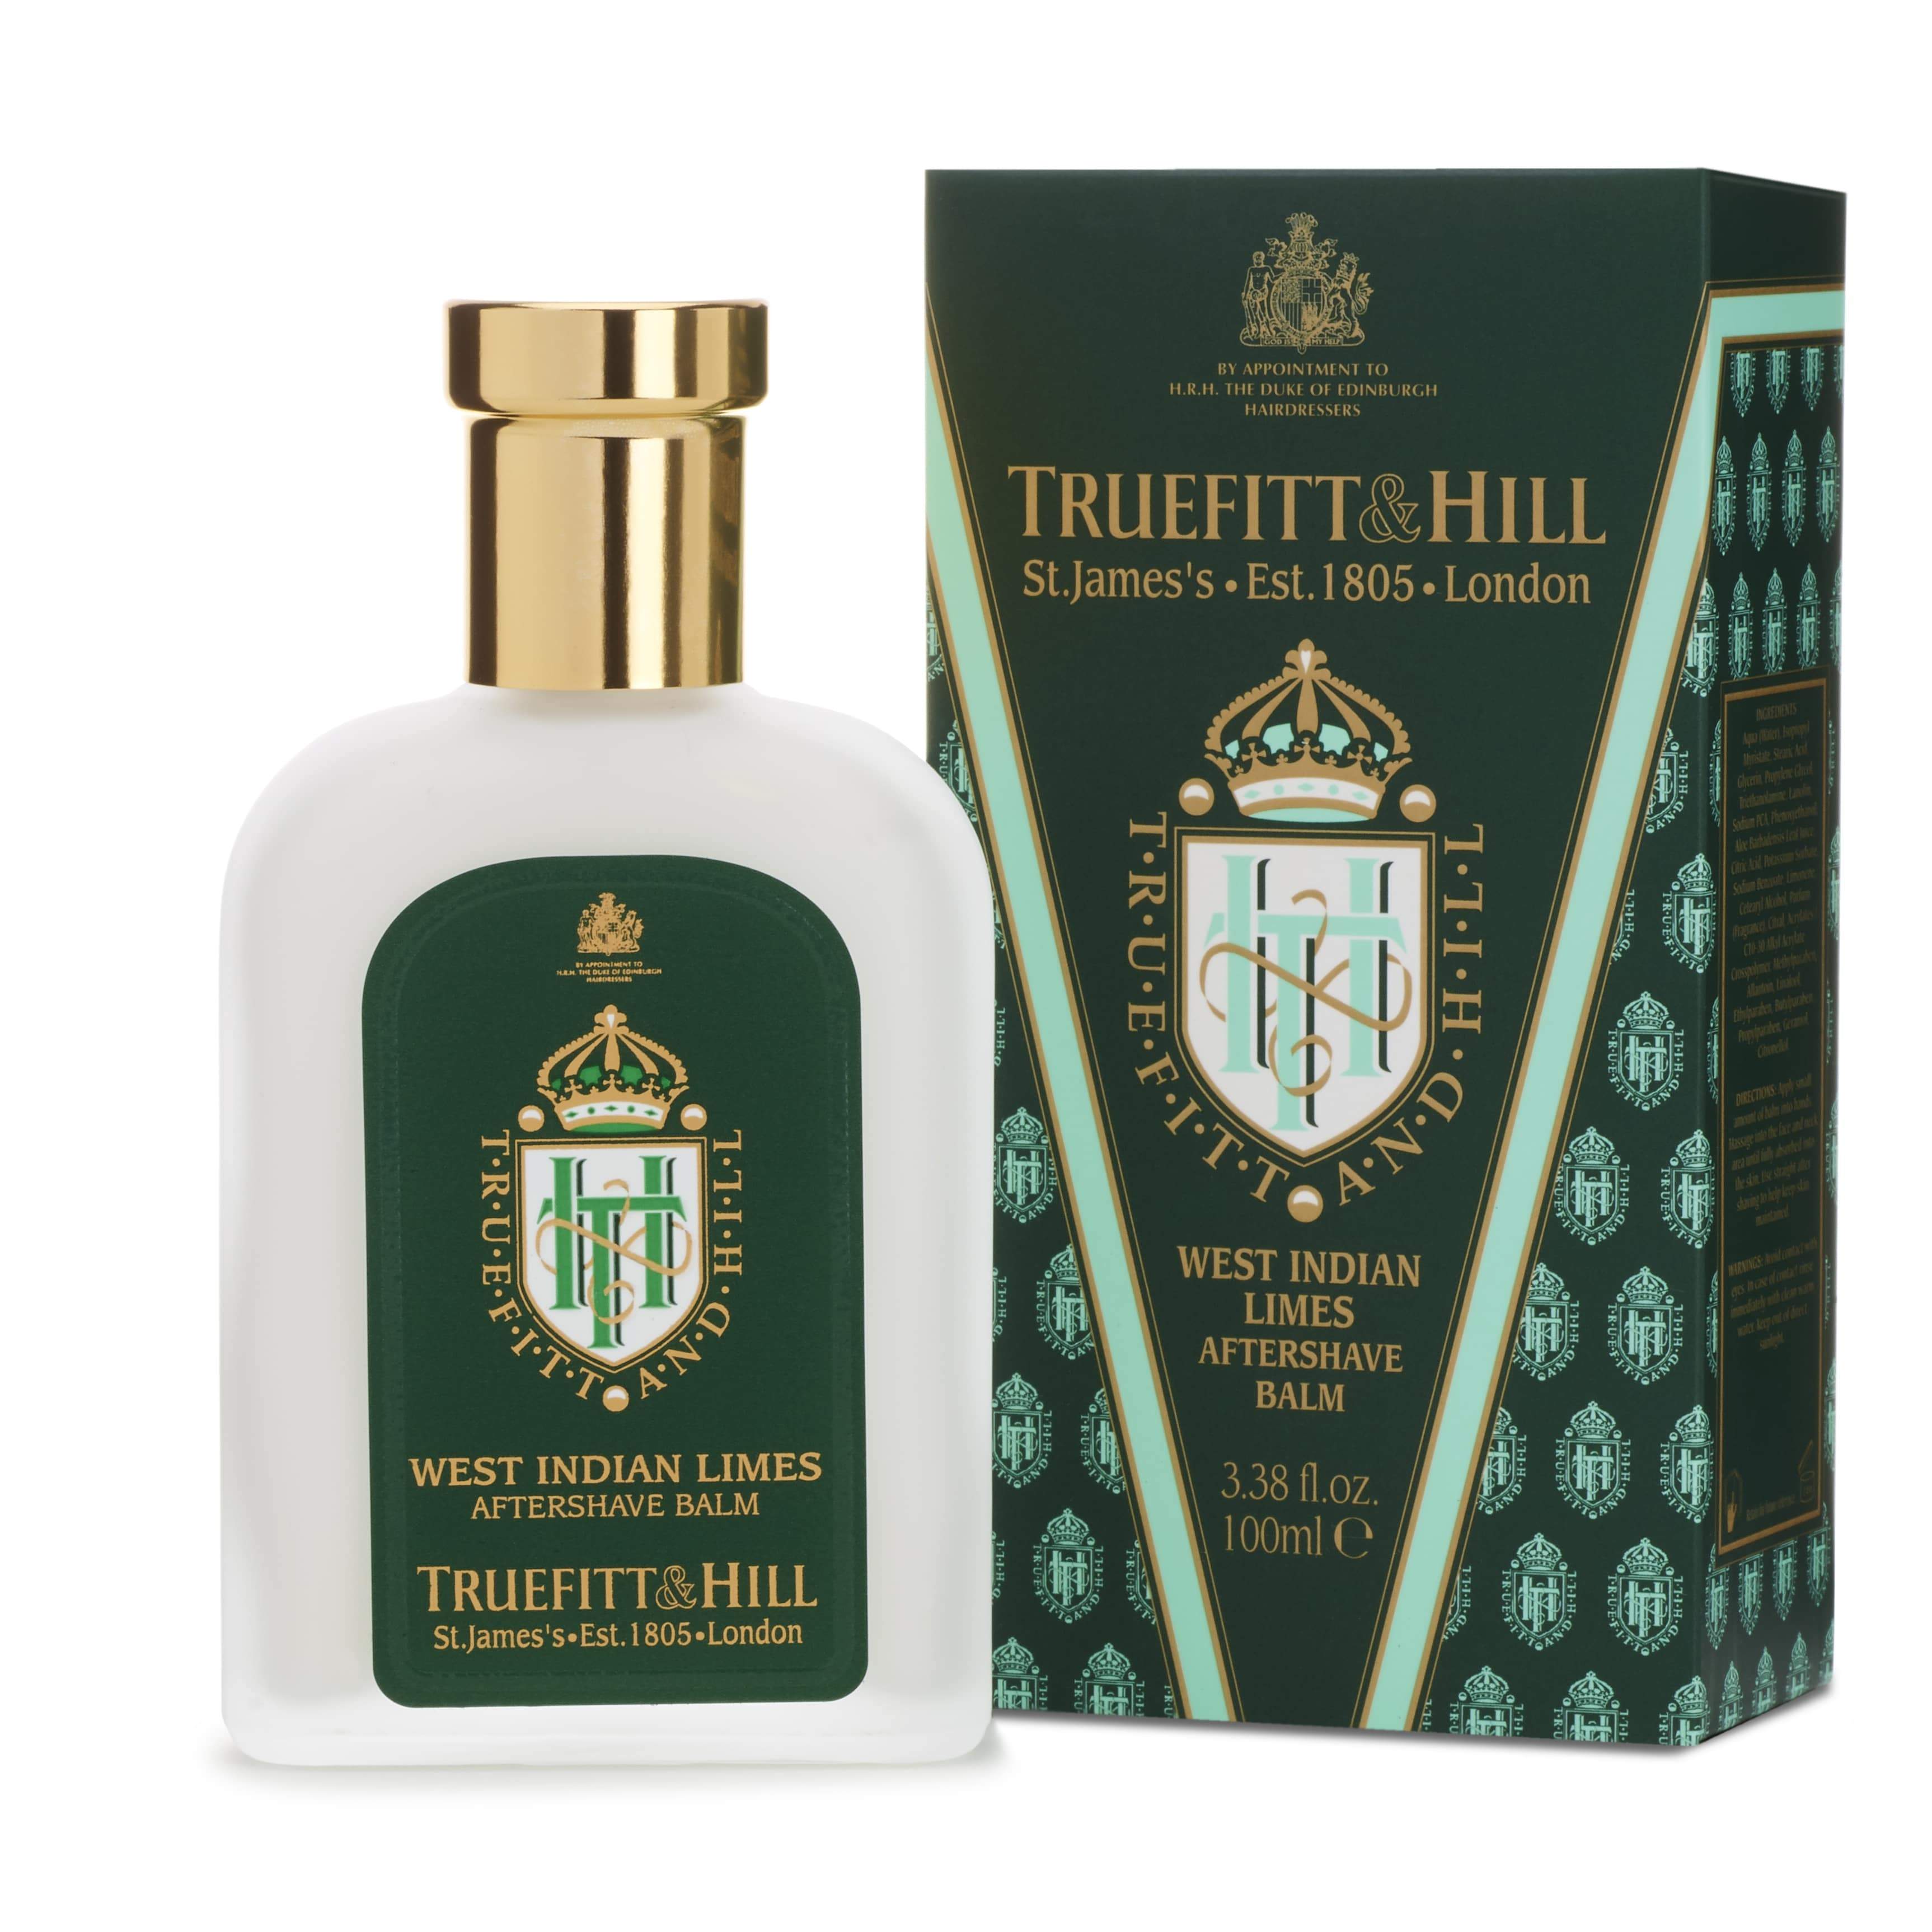 Truefitt & Hill Aftershave Balm West Indian Limes